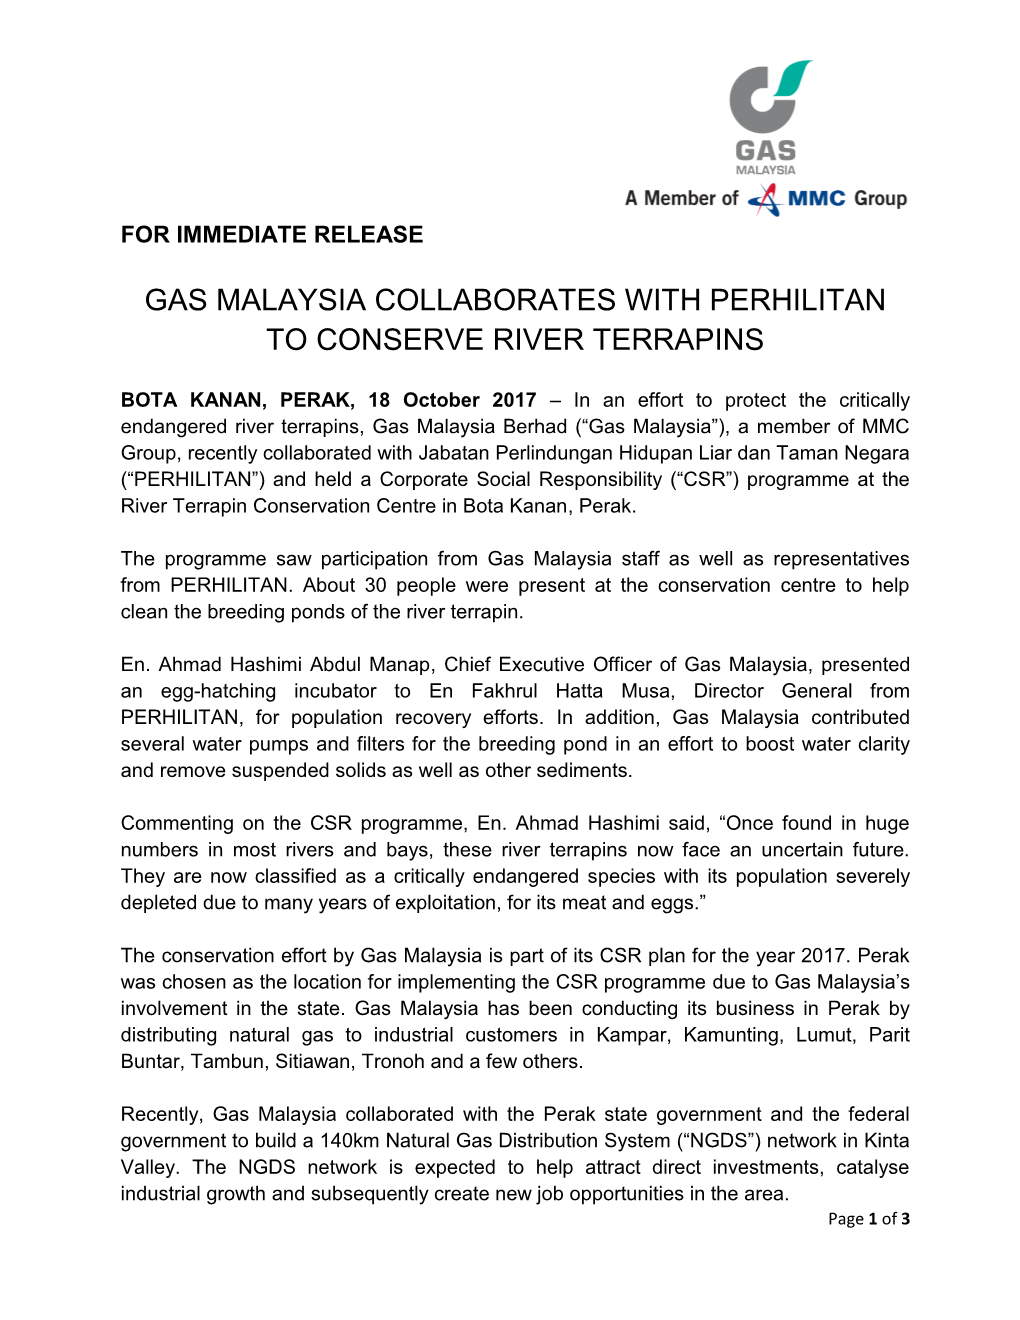 Gas Malaysia Collaborates with Perhilitan to Conserve River Terrapins